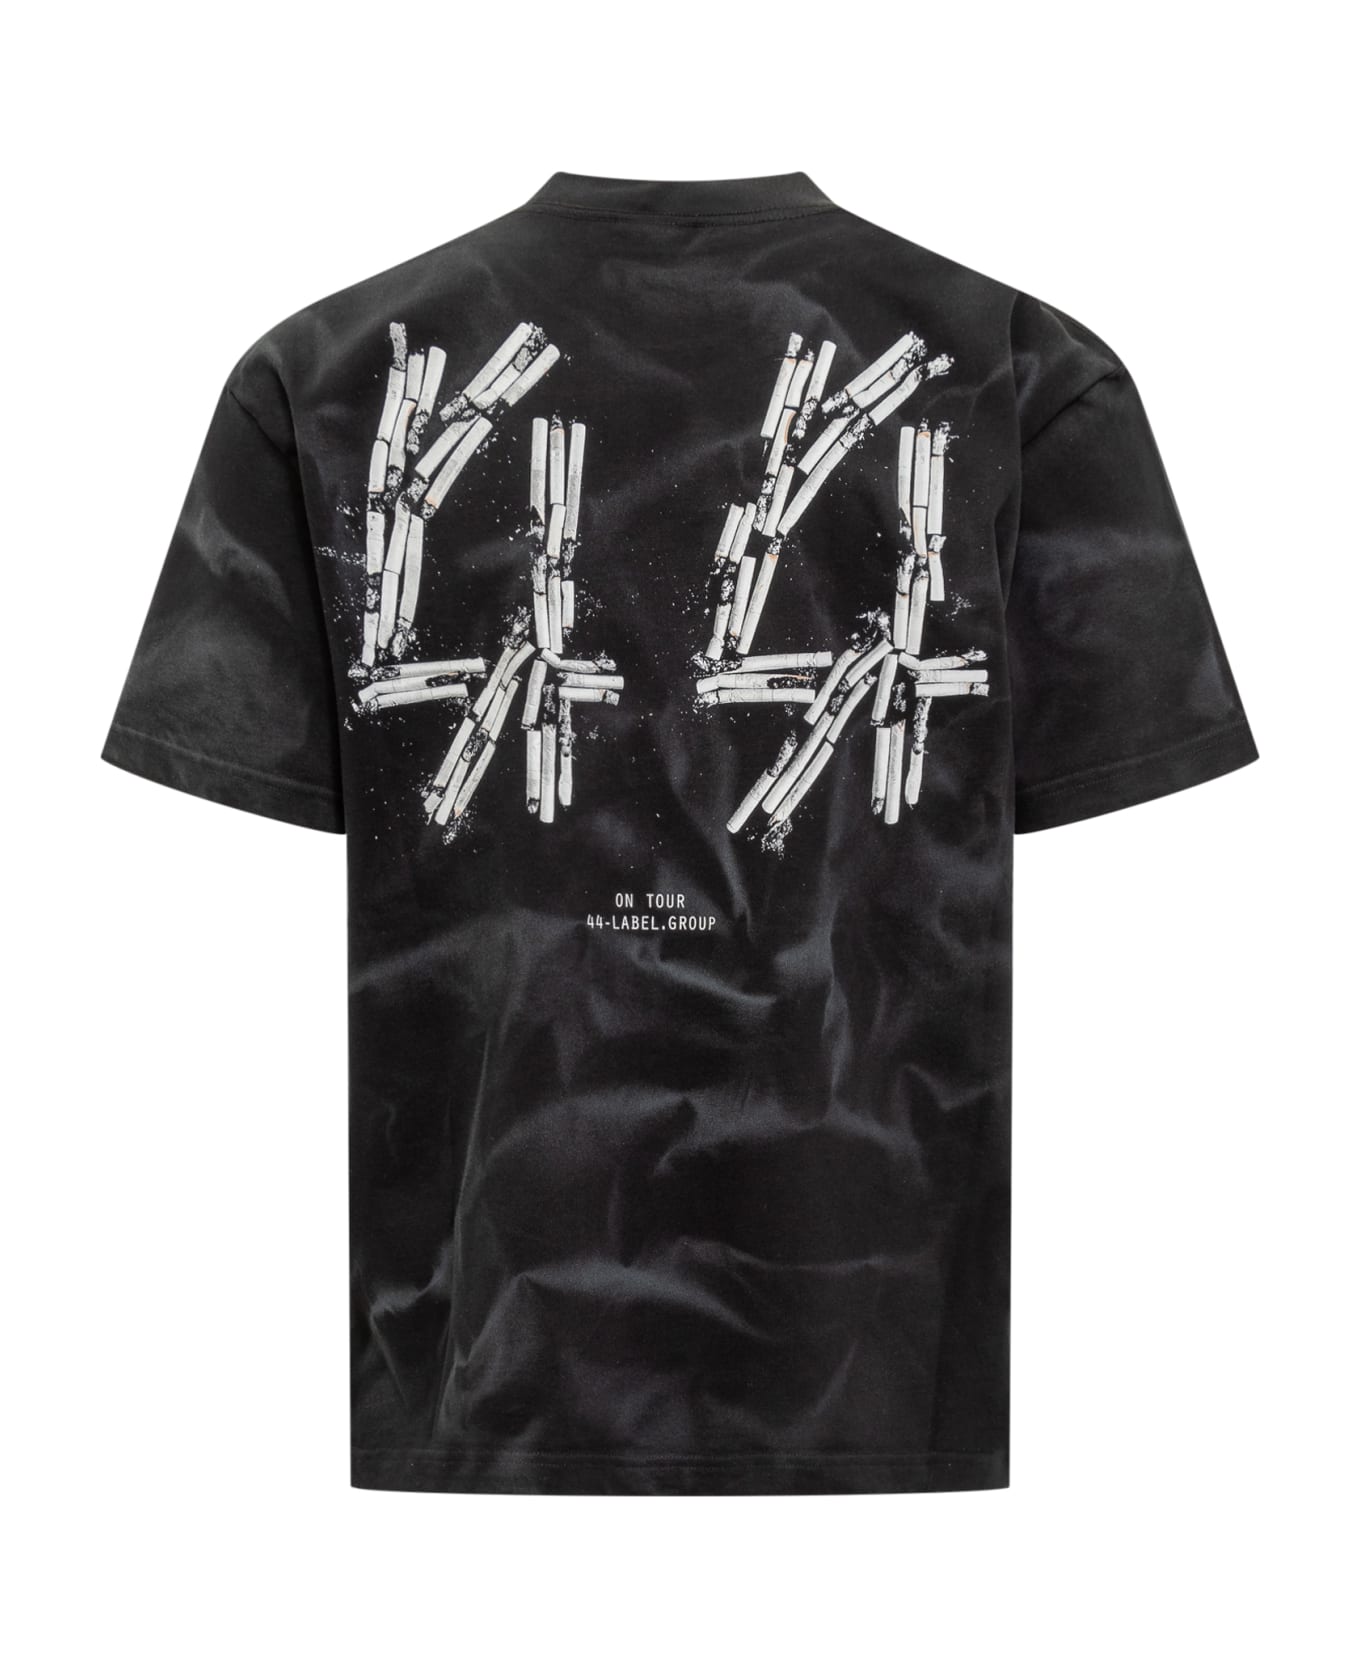 44 Label Group T-shirt With Smoke Effect - BLACK-SMOKE EFFECT シャツ